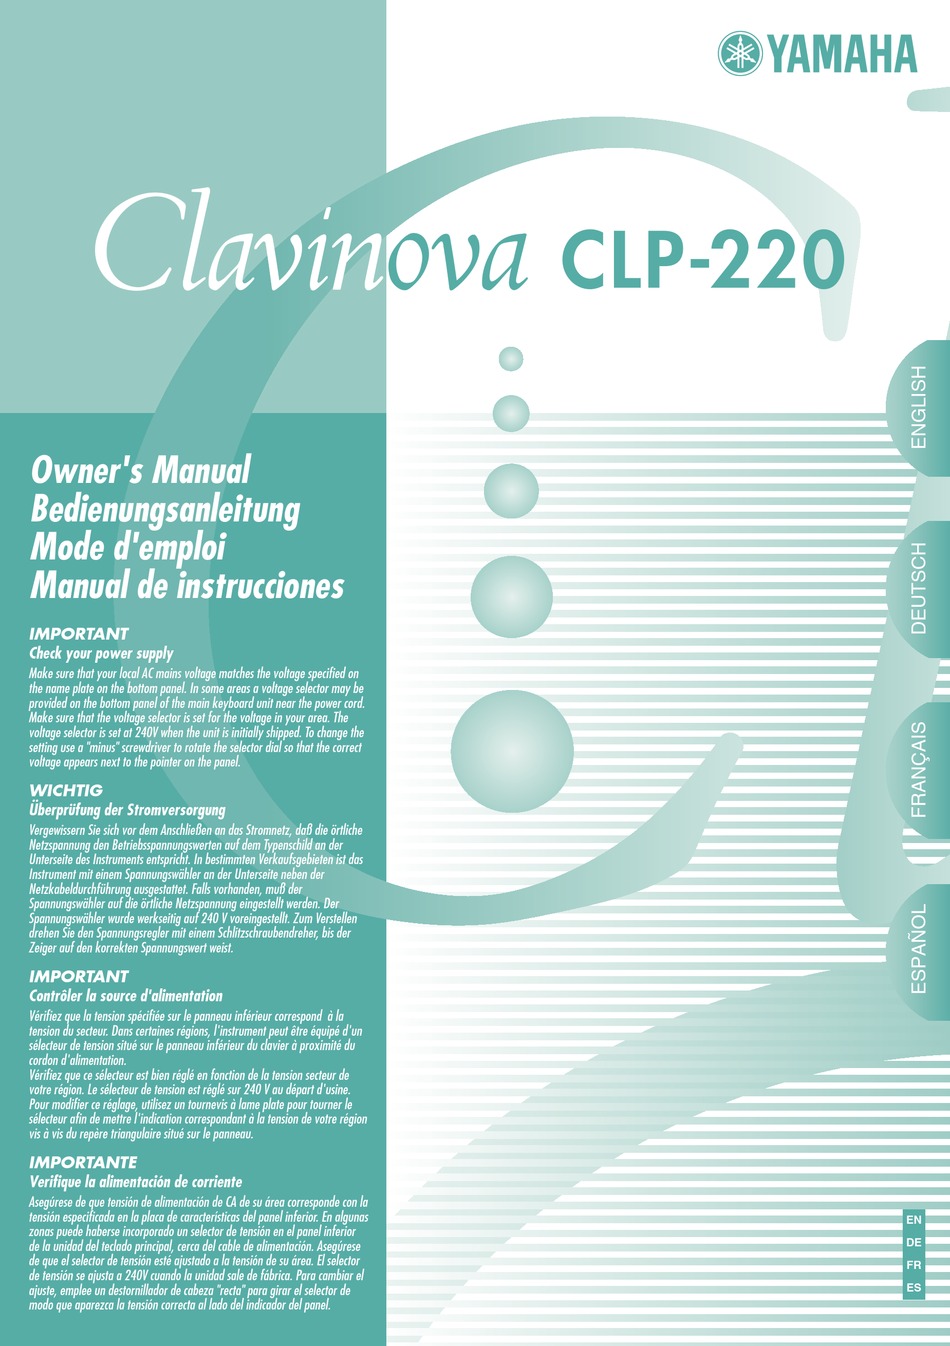 YAMAHA CLAVINOVA CLP-220 OWNER'S MANUAL Pdf Download | ManualsLib